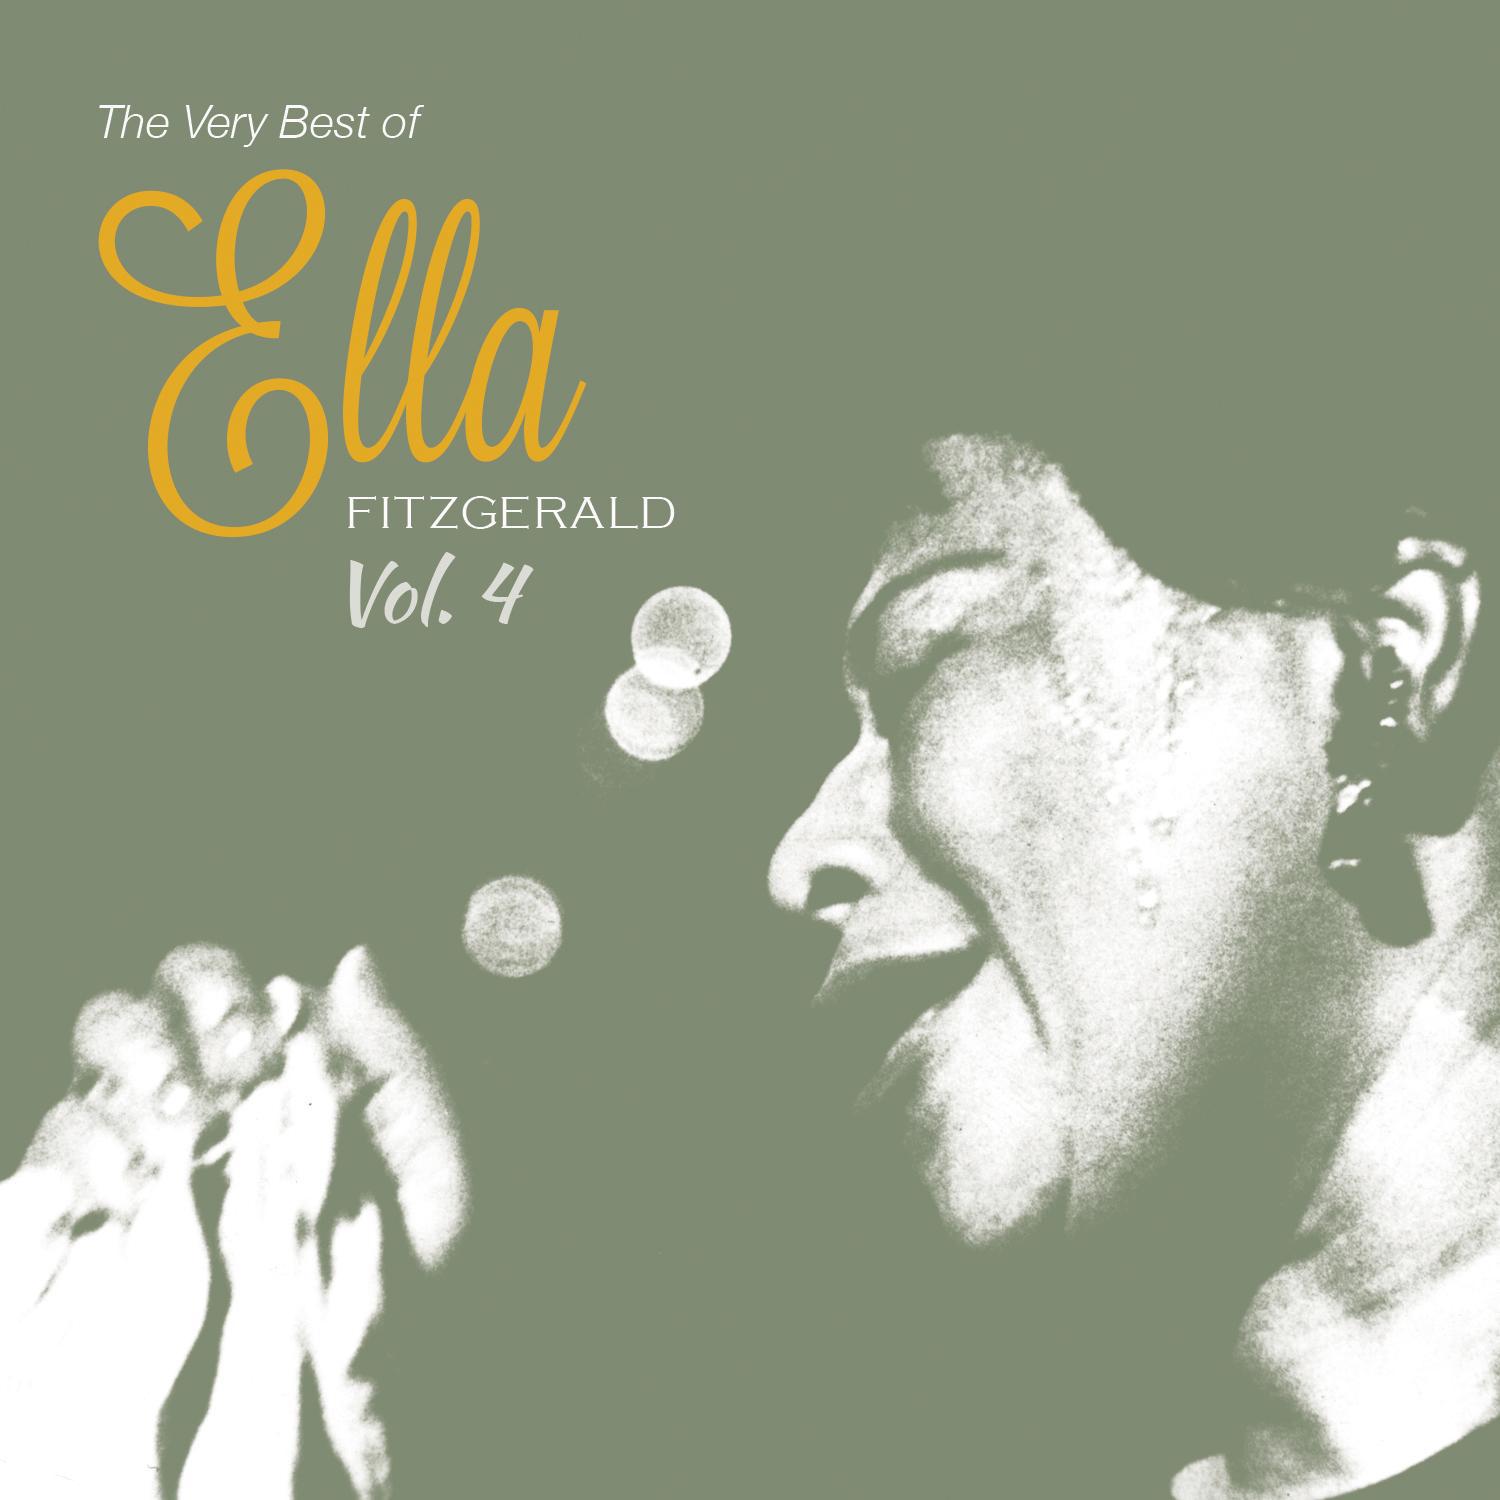 The Very Best of Ella Fiztgerald, Vol. 4